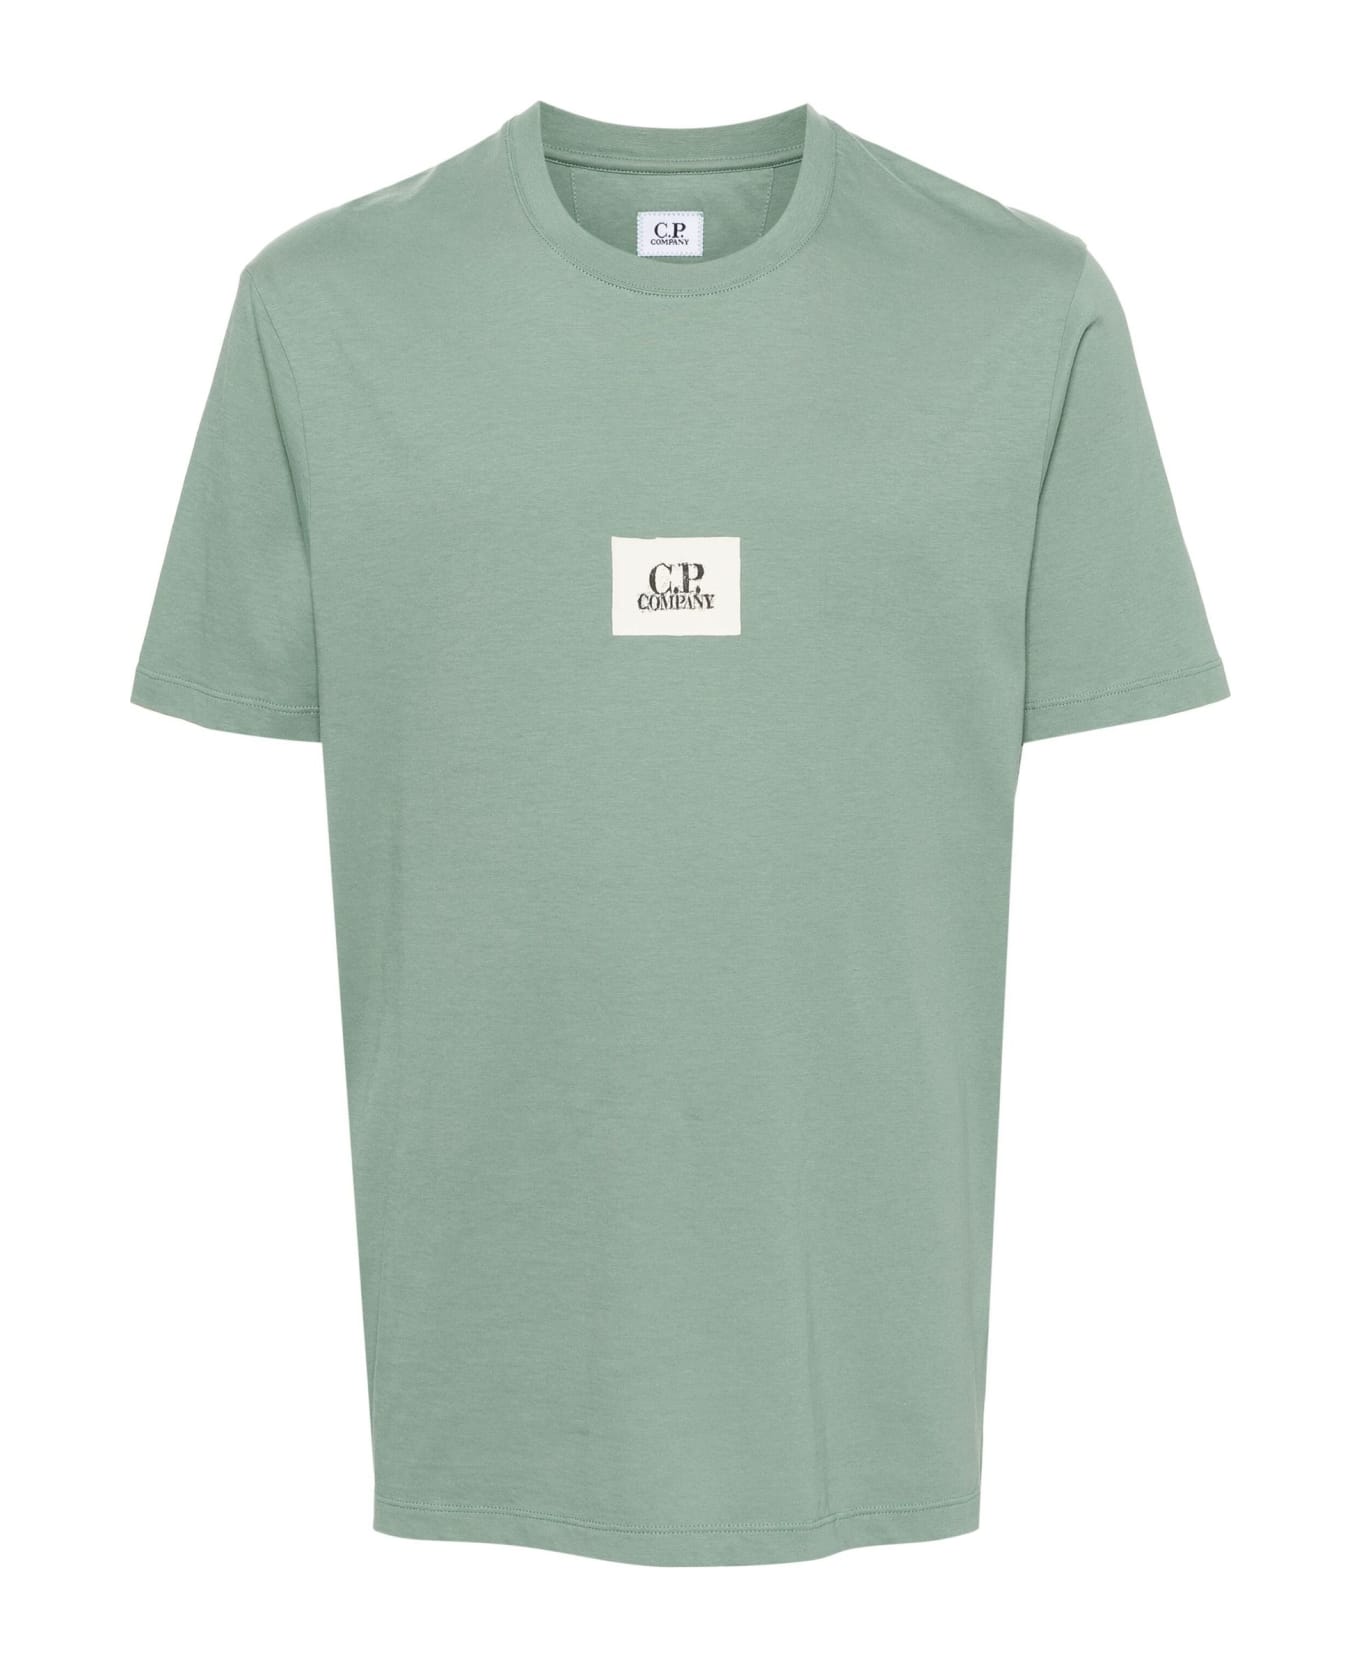 C.P. Company Green Cotton T-shirt - Green